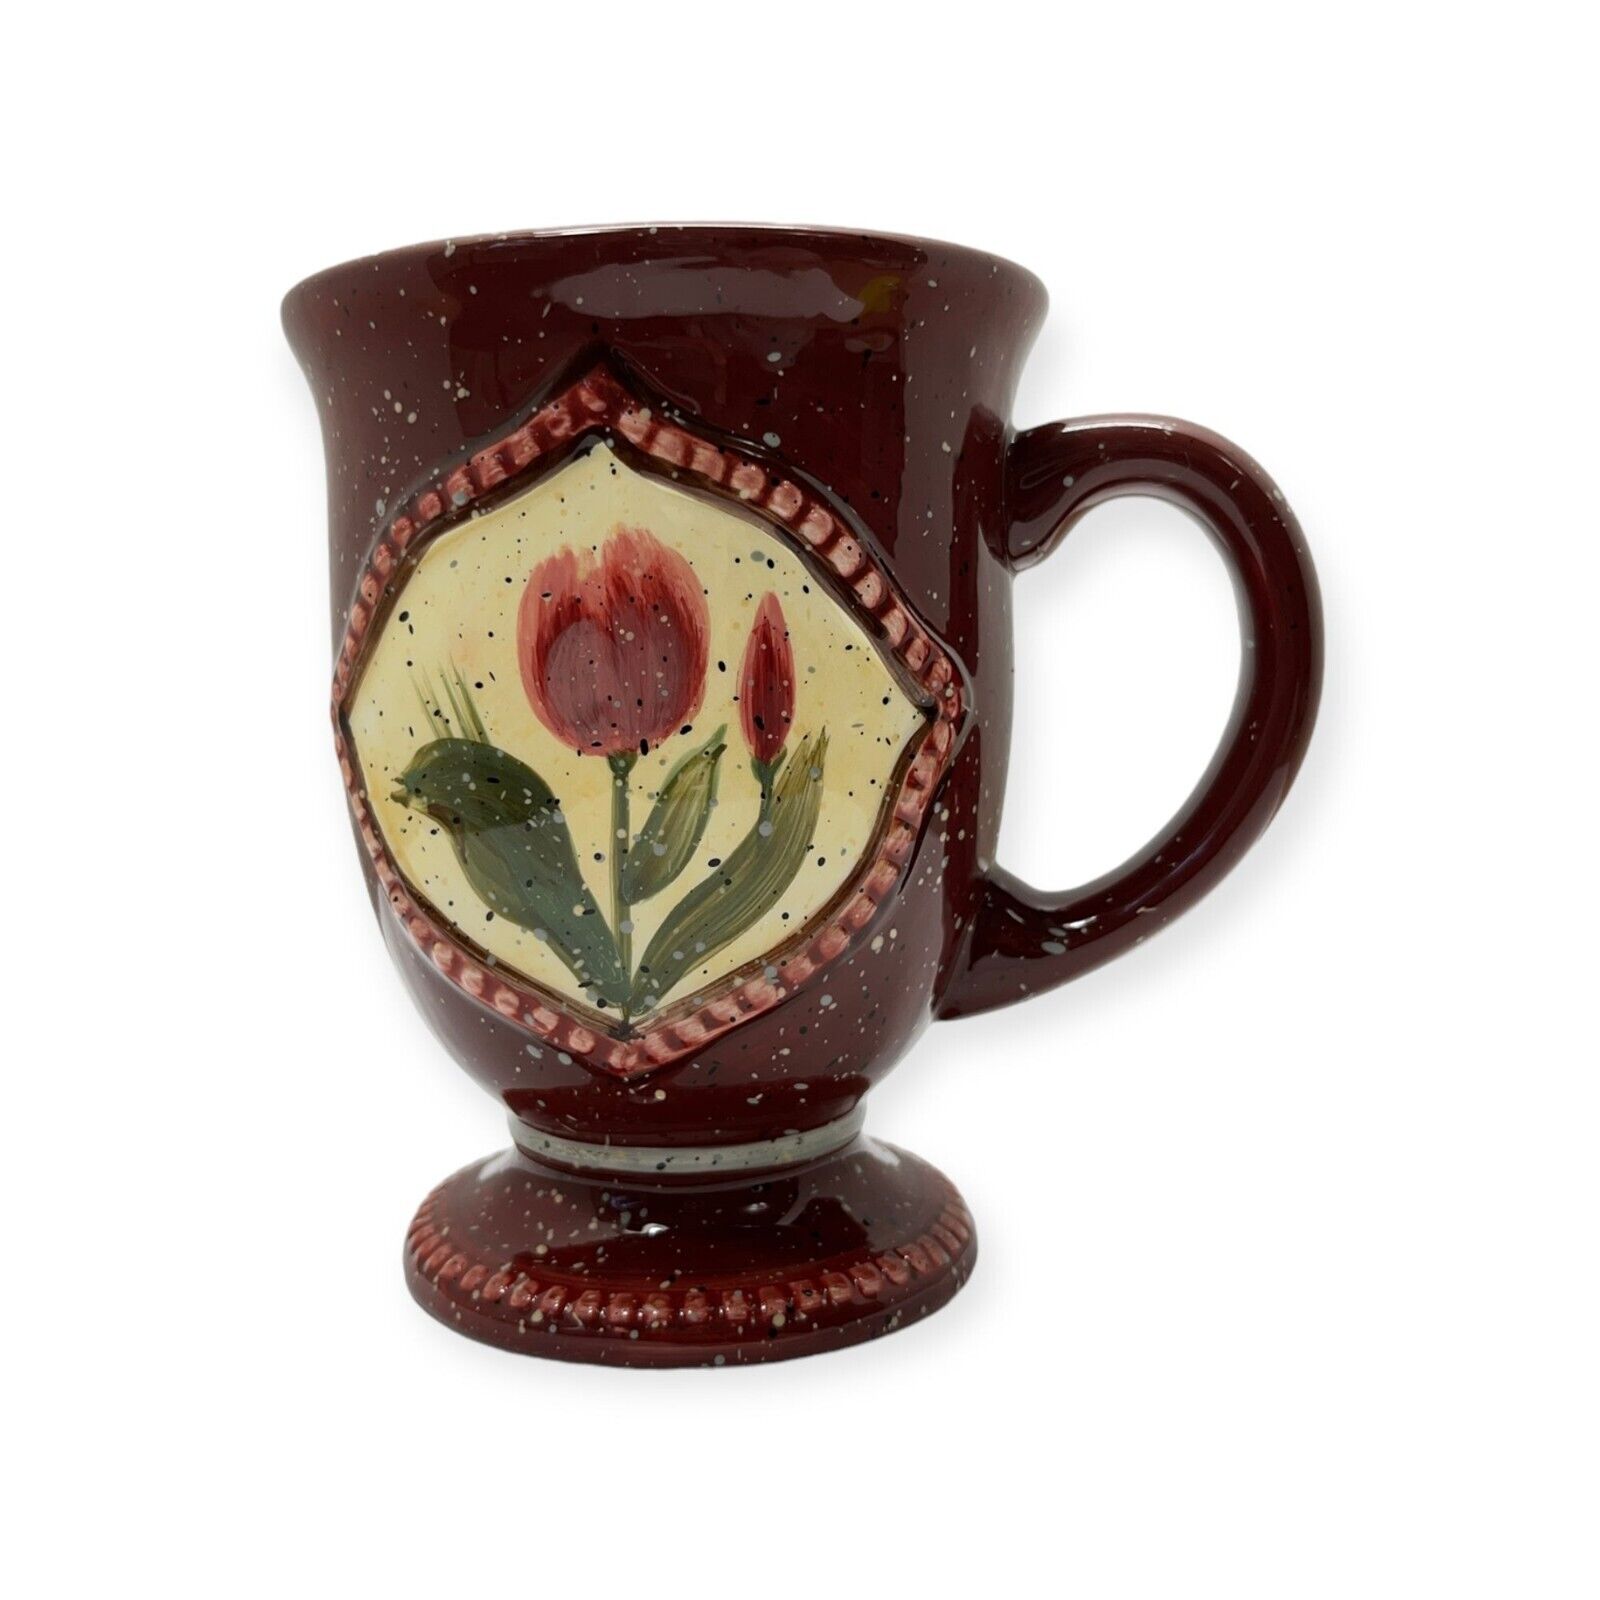 Vintage Enesco Julie Ueland Coffee Mug Ceramic Tulip Pattern